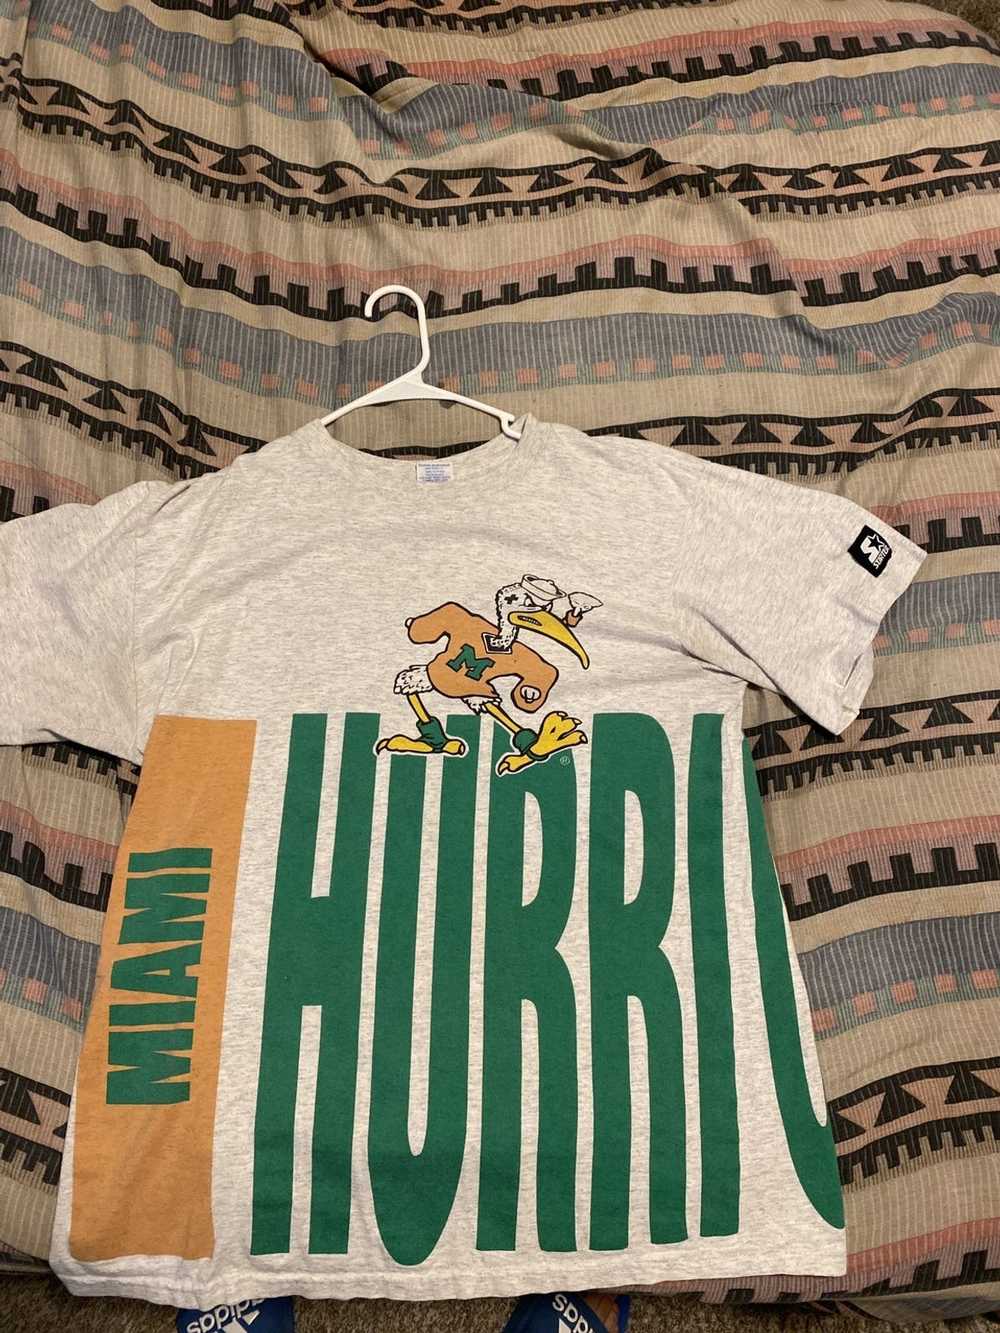 Vintage vintage miami hurricanes shirt - image 1